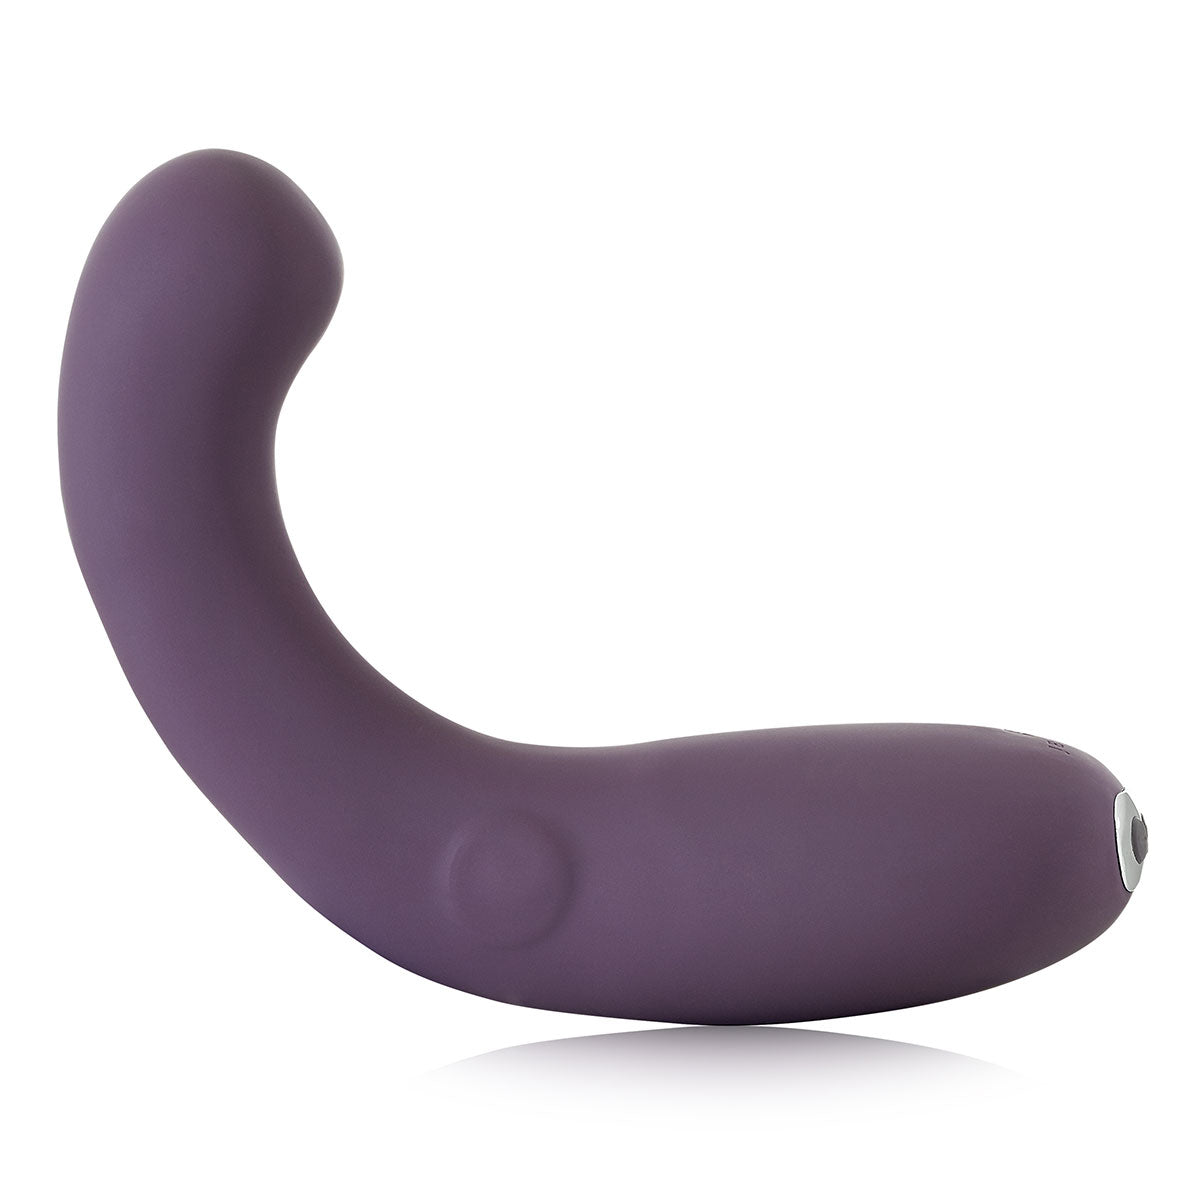 Je Joue G-Kii - Purple Intimates Adult Boutique